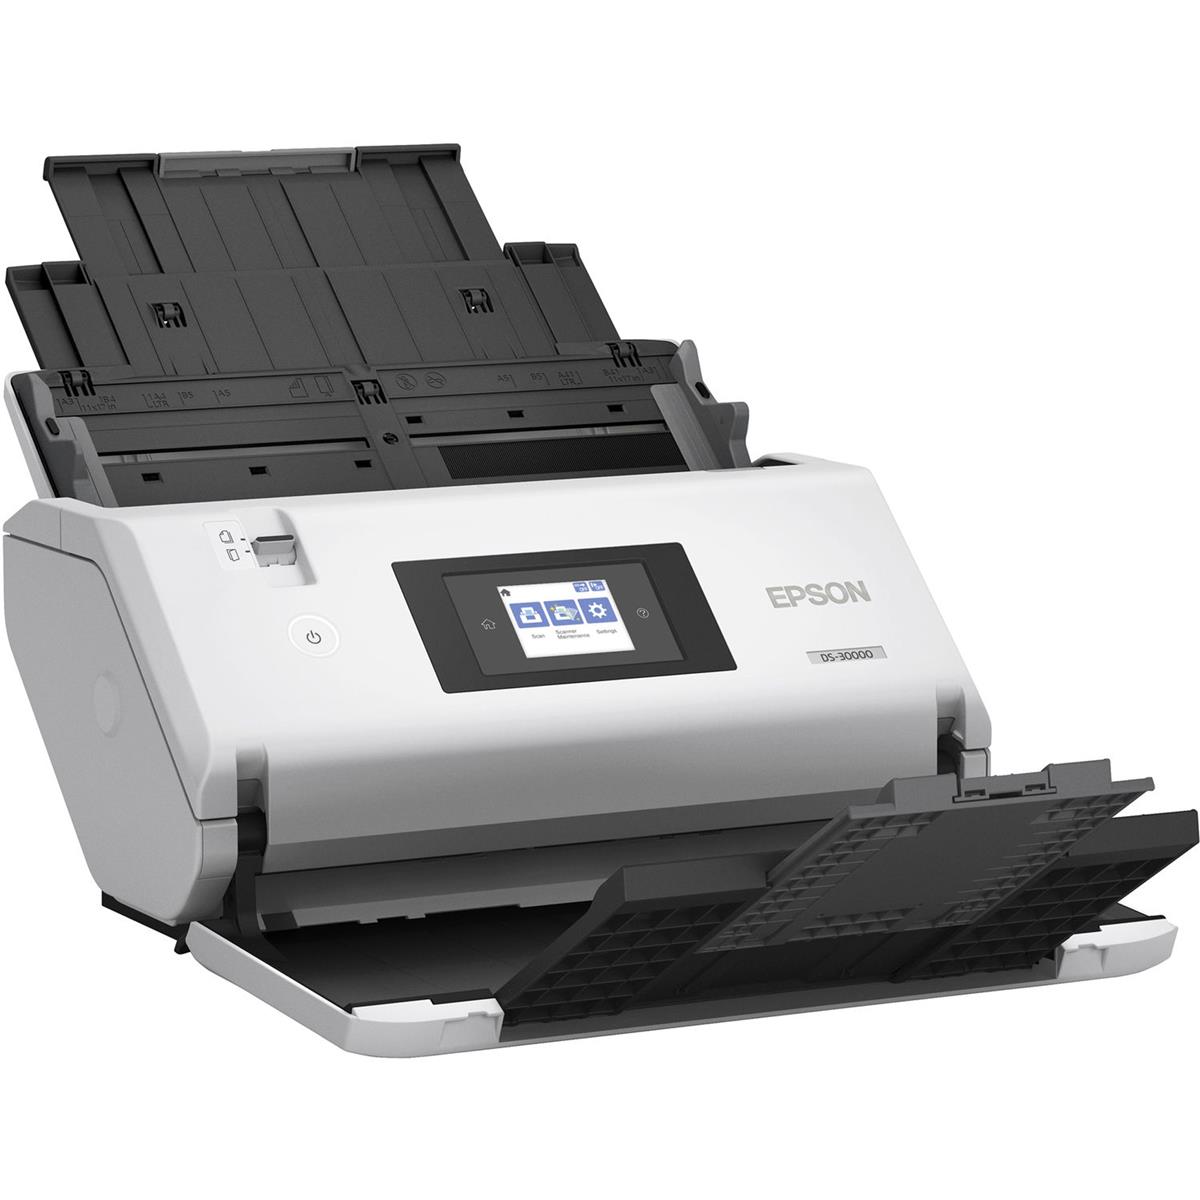 

Epson DS-30000 Large-Format Duplex Document Scanner, 55 ppm/110 ipm Scan